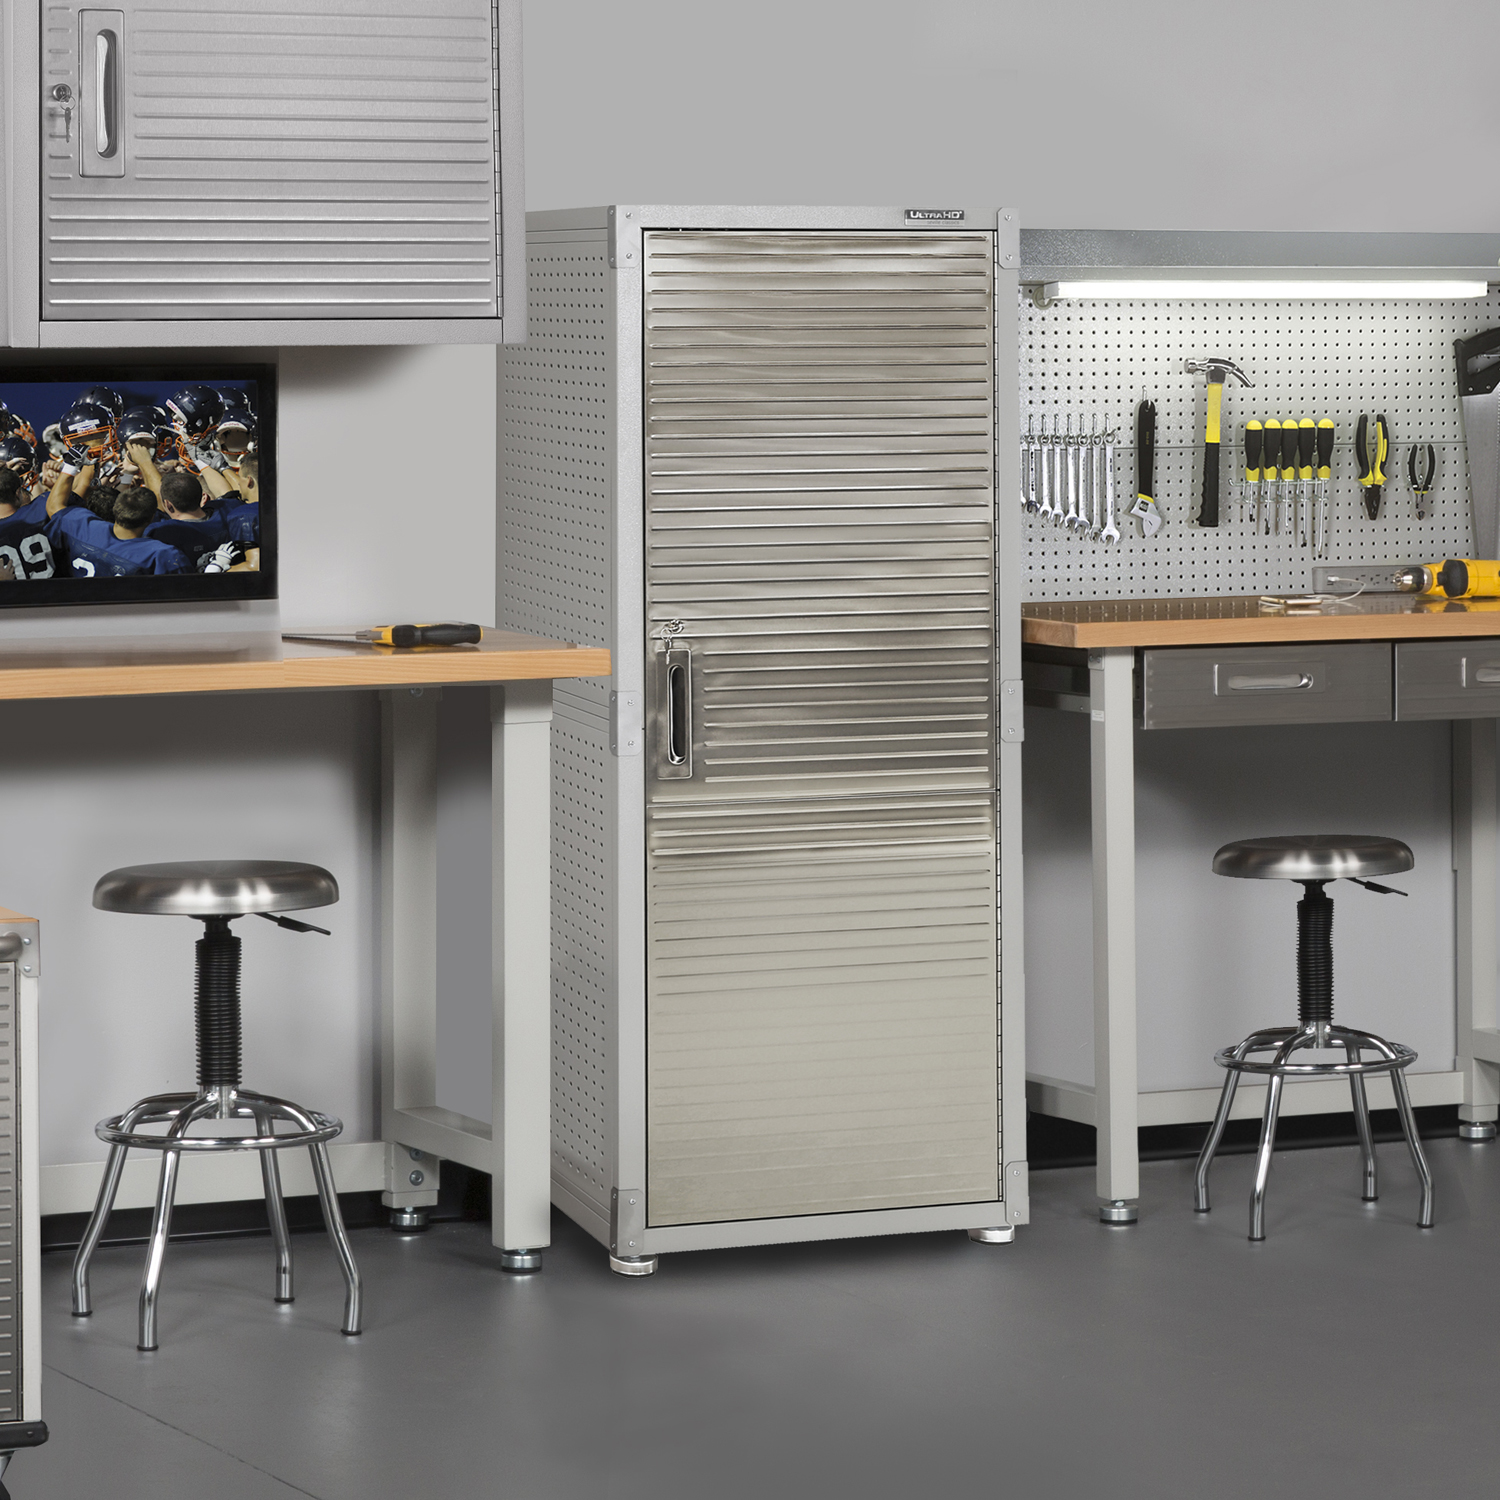 Seville Classics UltraHD Steel Storage Locker Cabinet, 24" W x 18" D x 66" H, Granite Gray - image 5 of 11